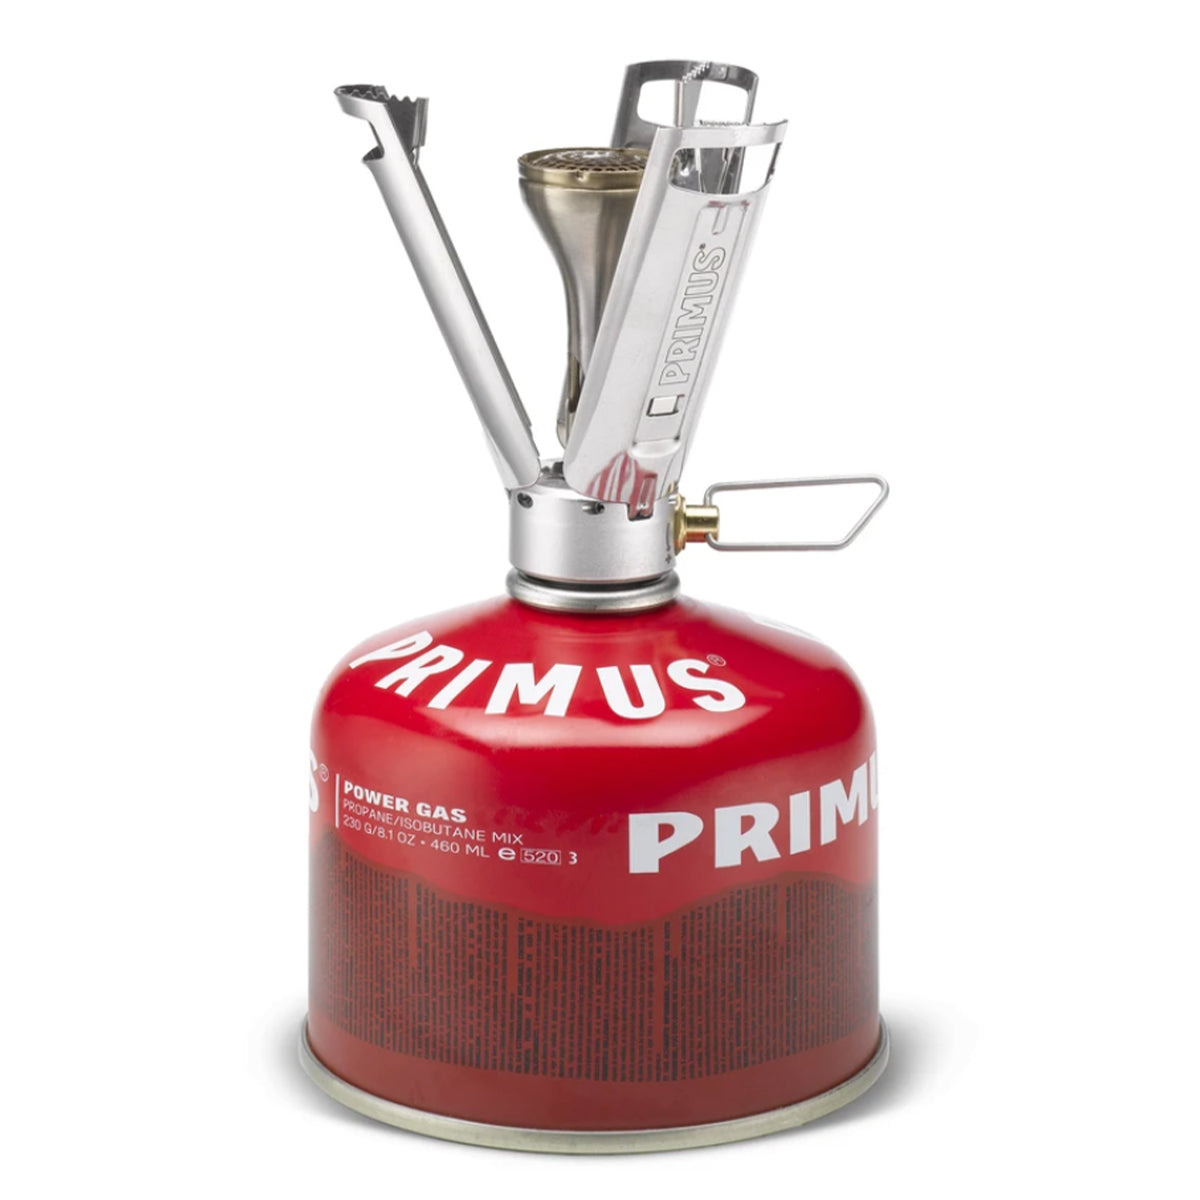 Primus Firestick TI Stove in  by GOHUNT | Primus - GOHUNT Shop